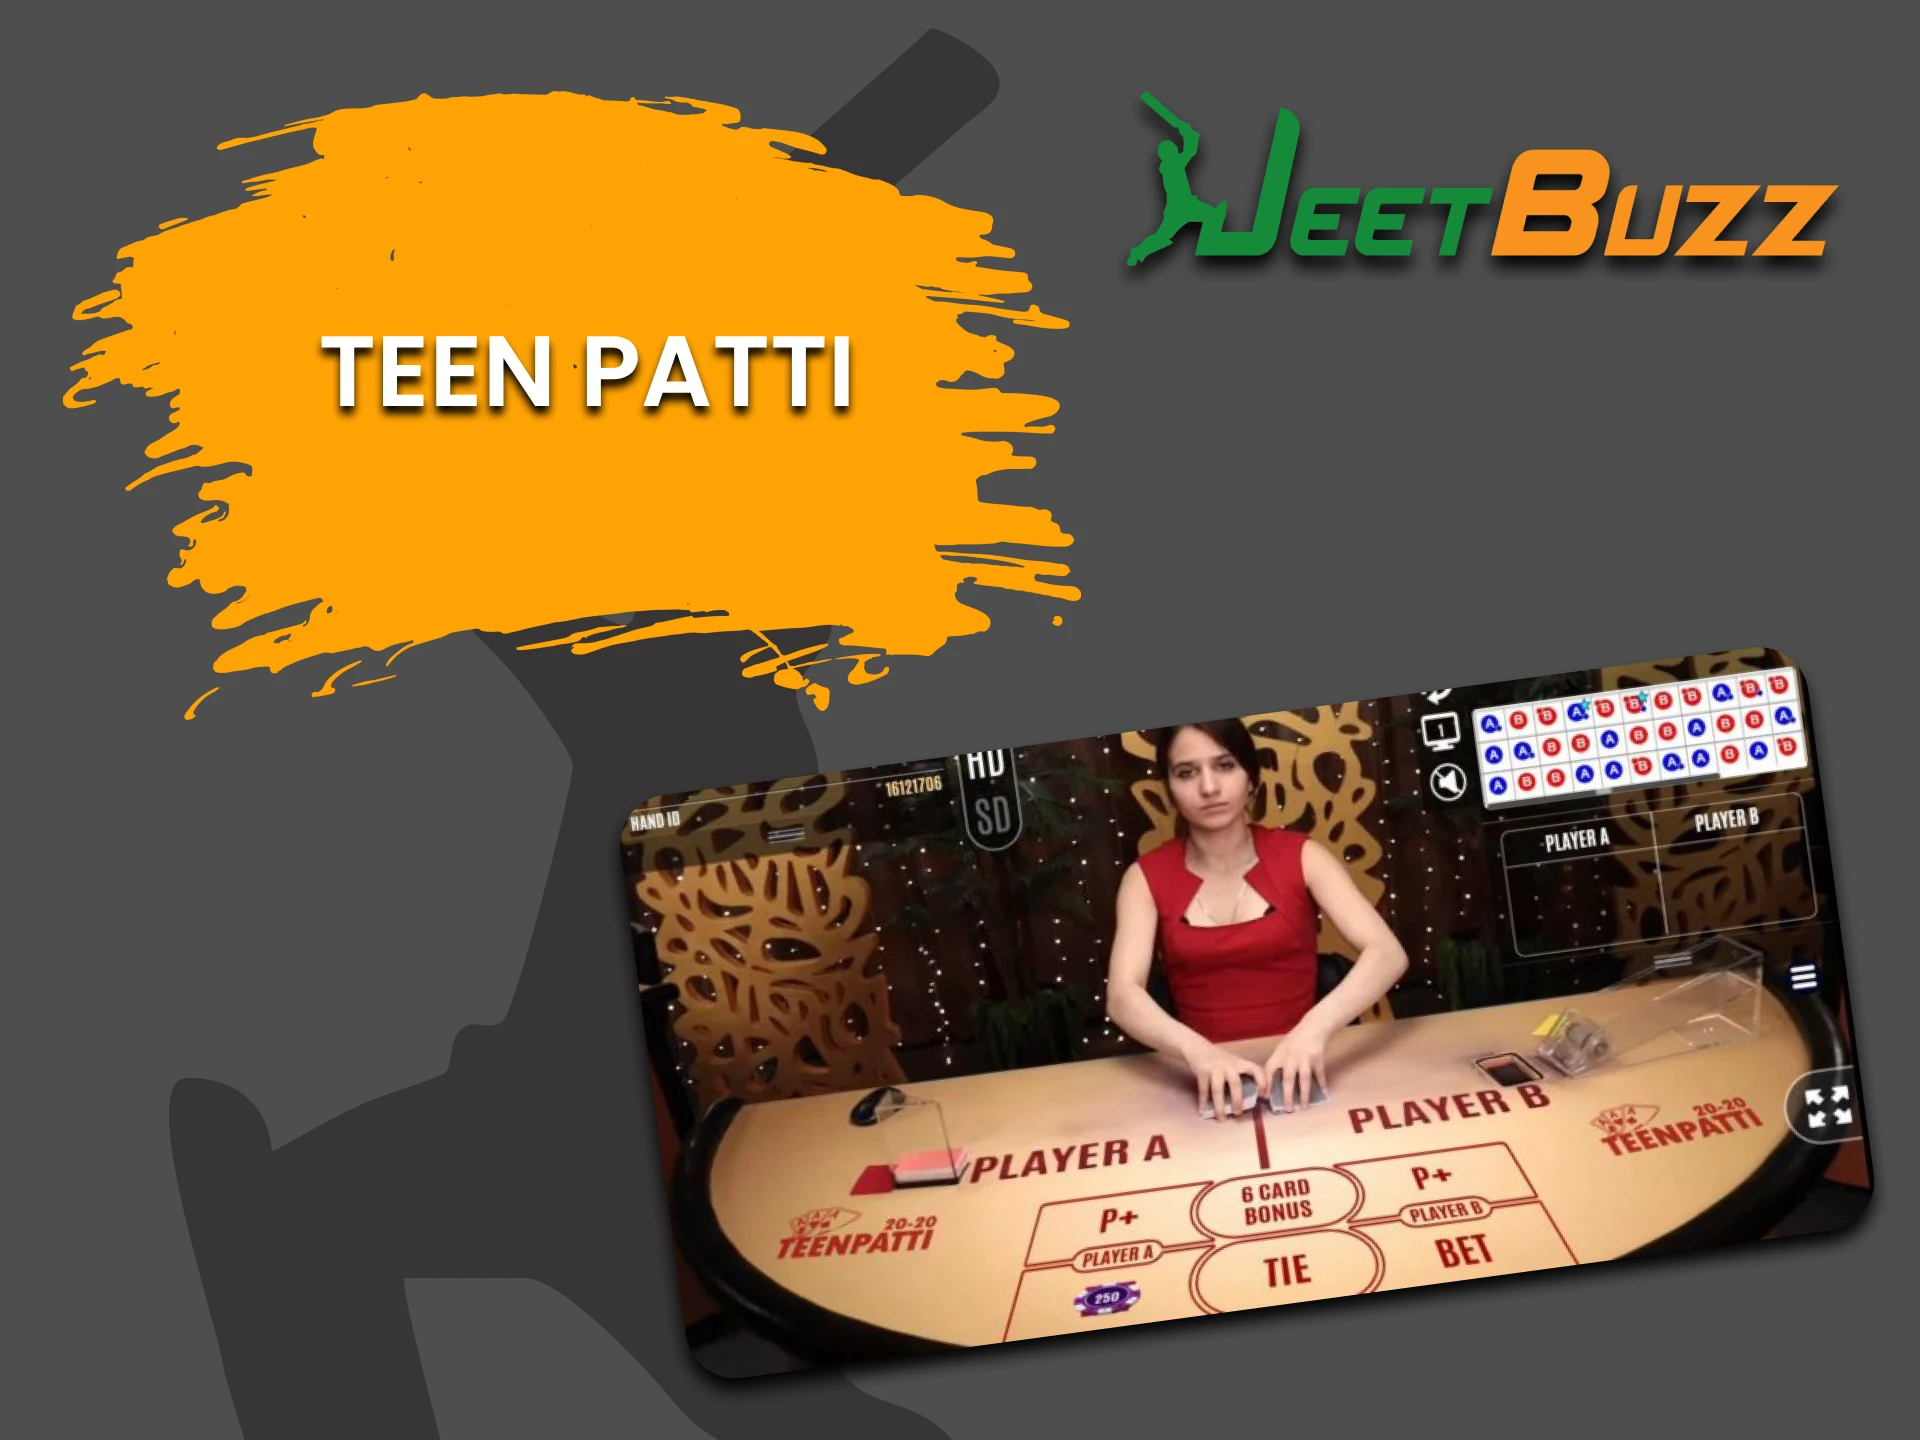 To play live casino on JettBuzz, choose Teen Patti.